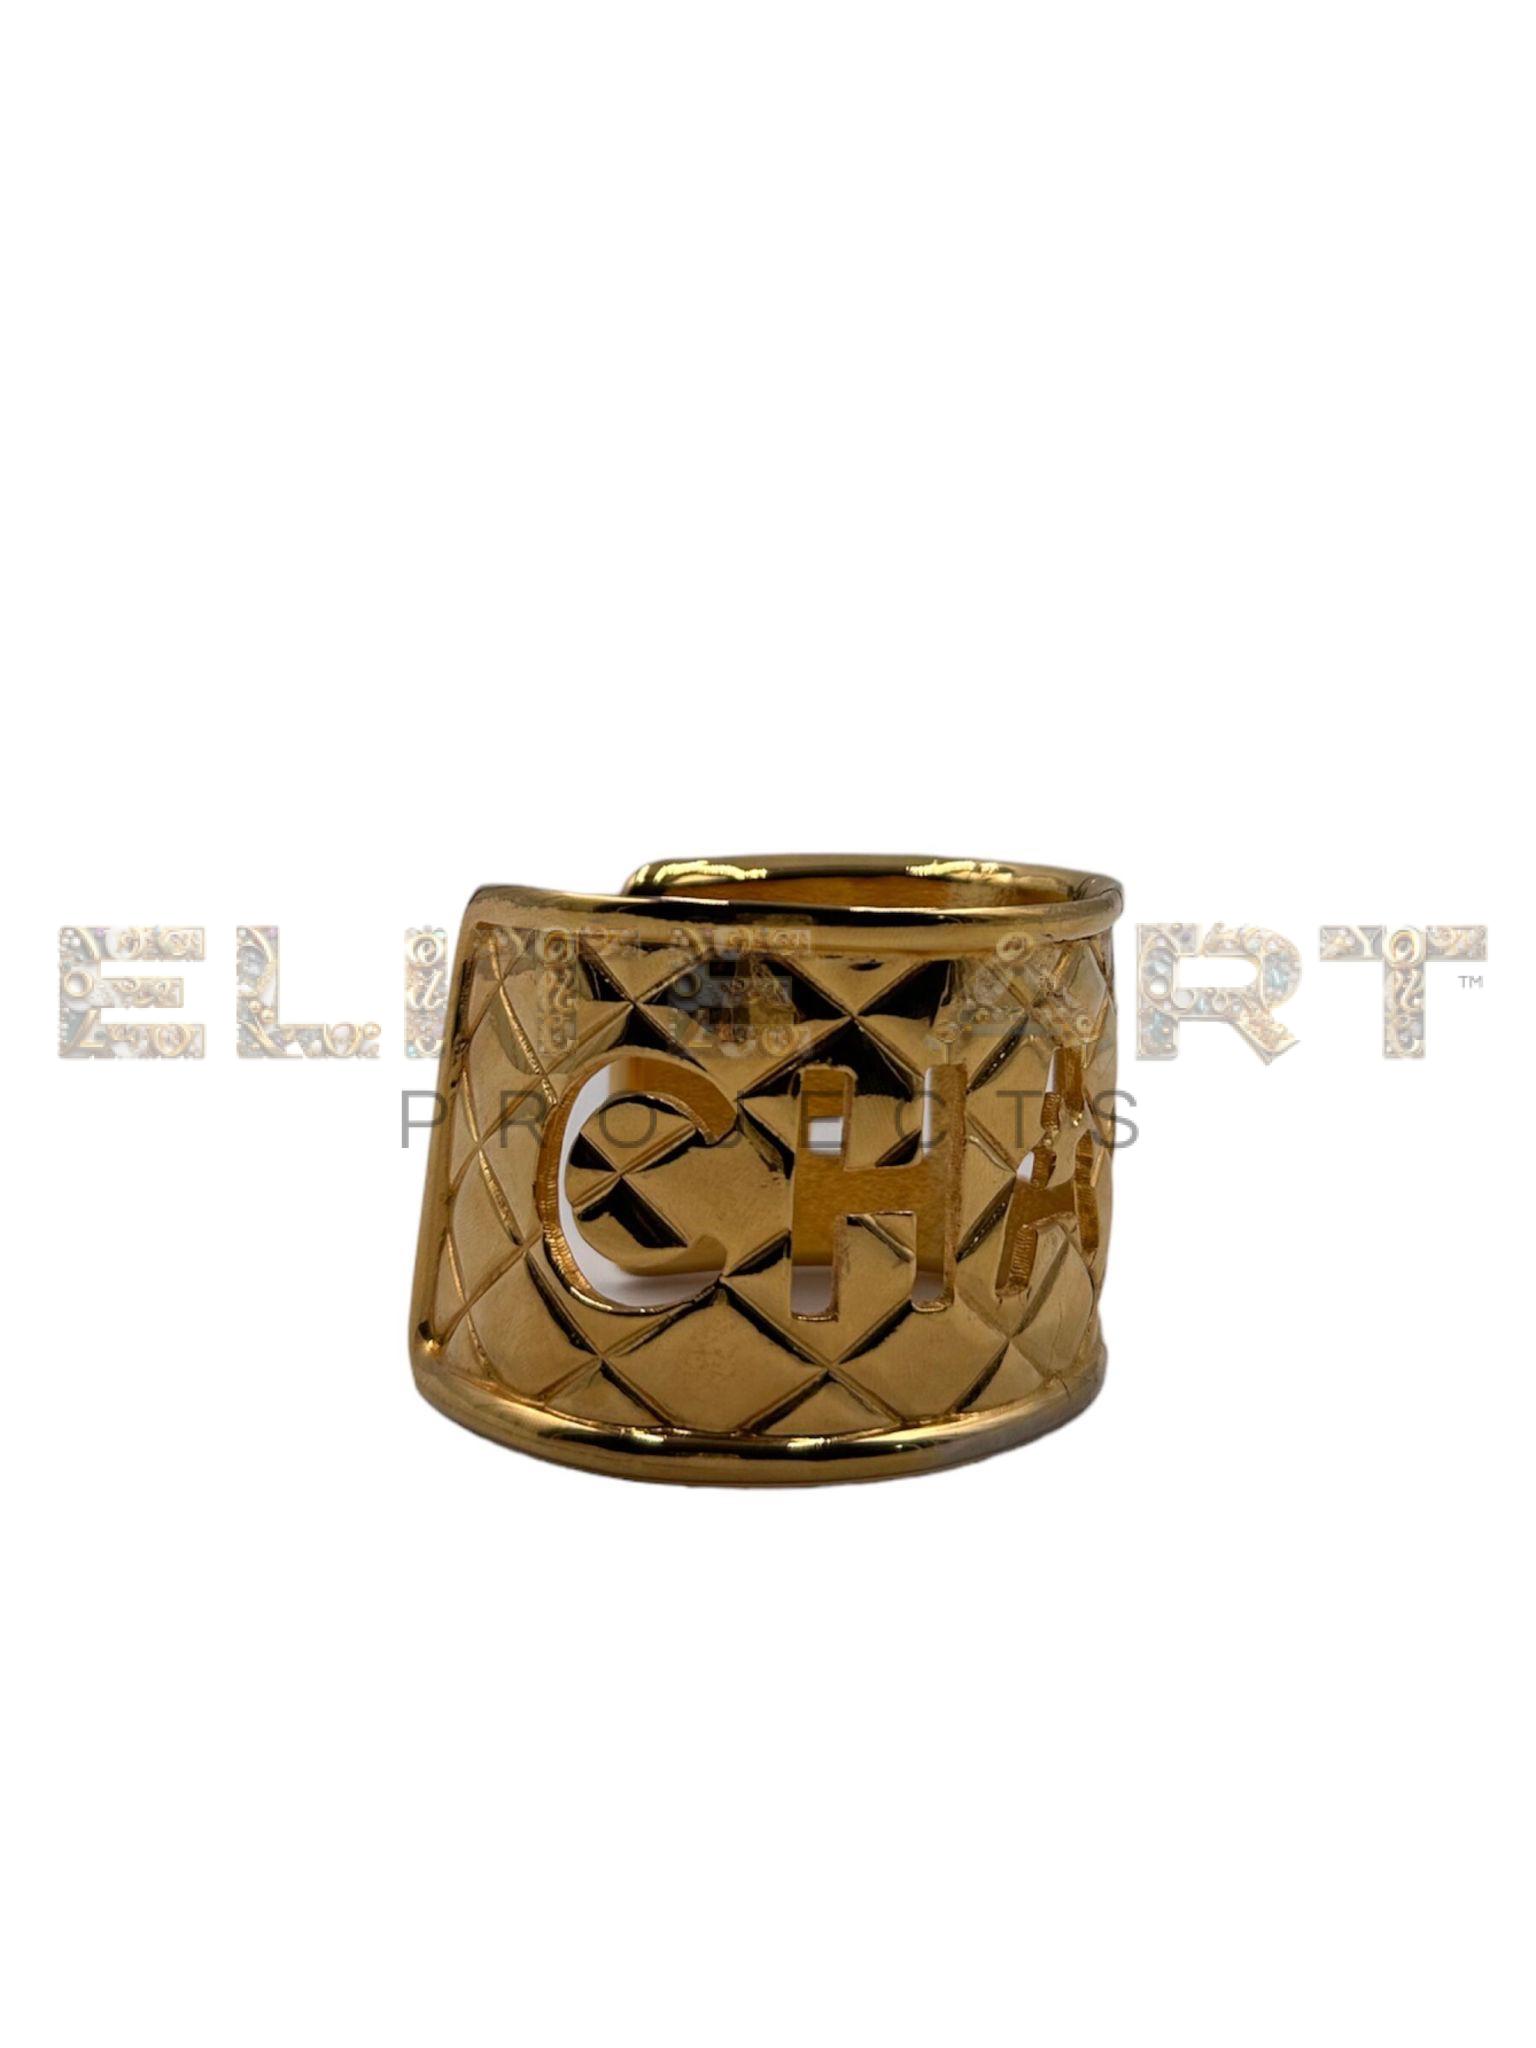 Chanel,vintage,bracelet,bangle,gold-plated metal,embossed quilted pattern,"CHANEL" logo,16.5 cm circumference,adjustable opening